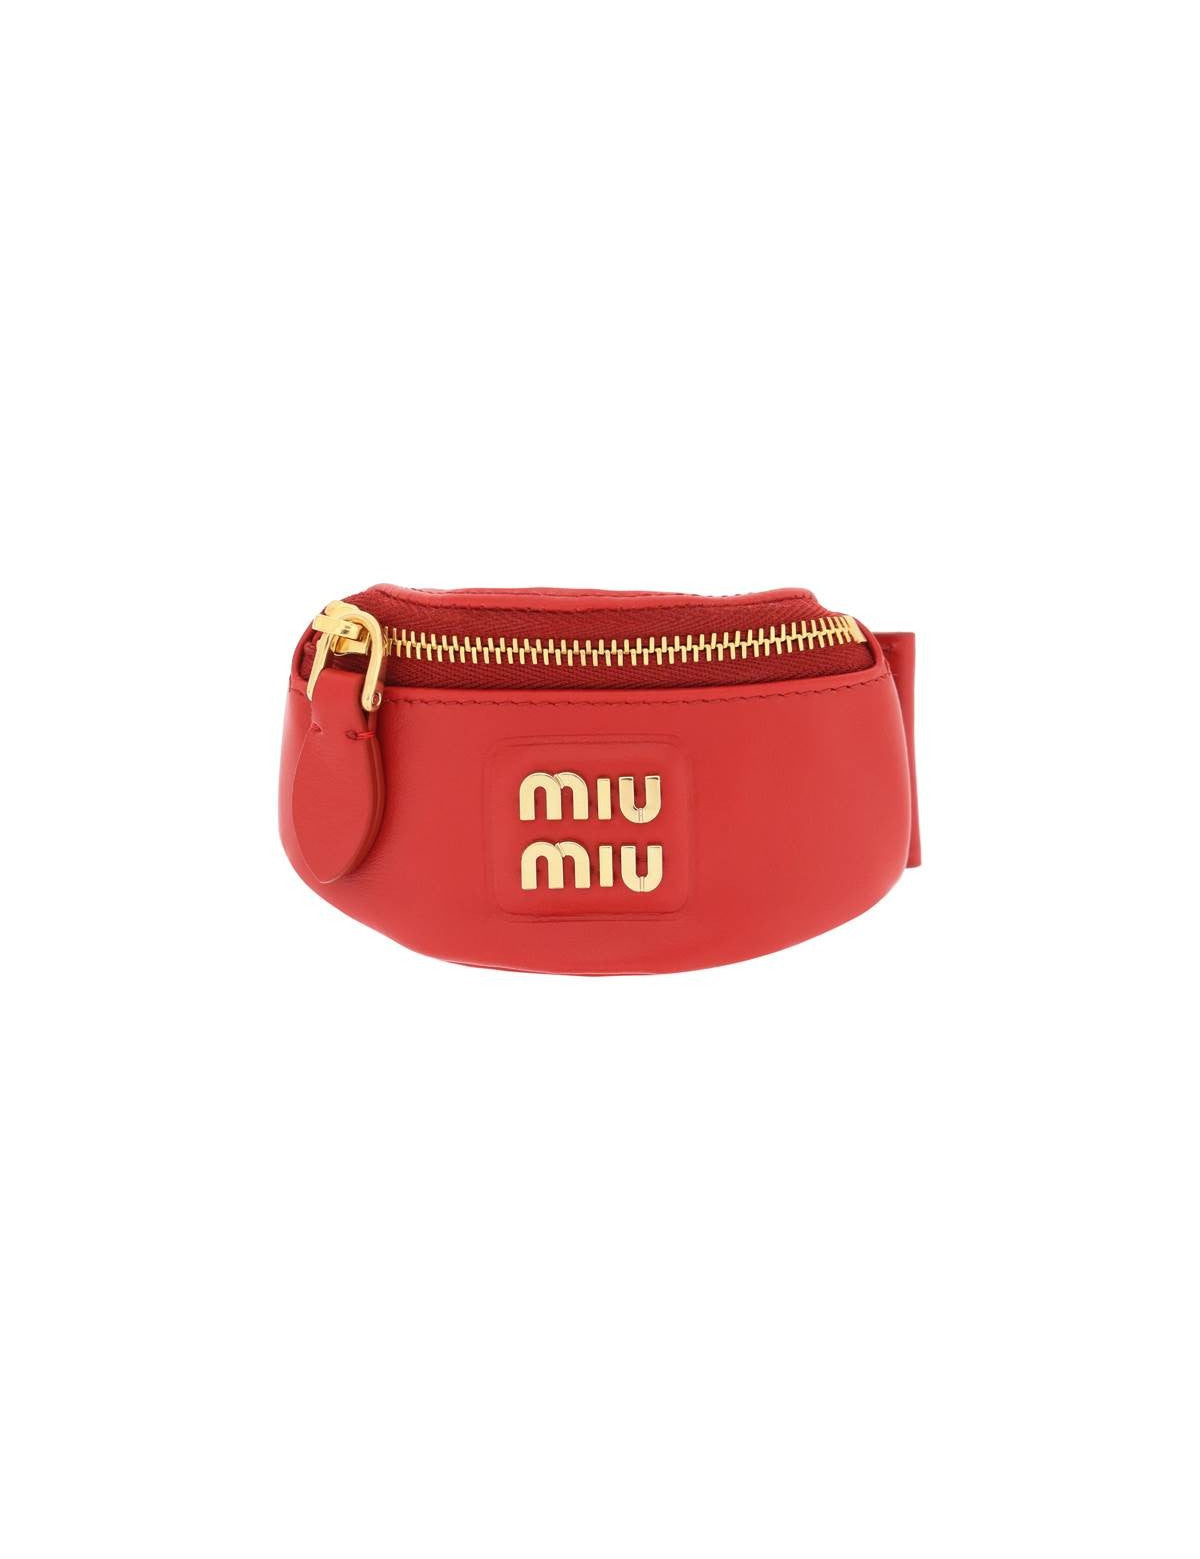 miu-miu-leather-mini-pouch-bracelet.jpg